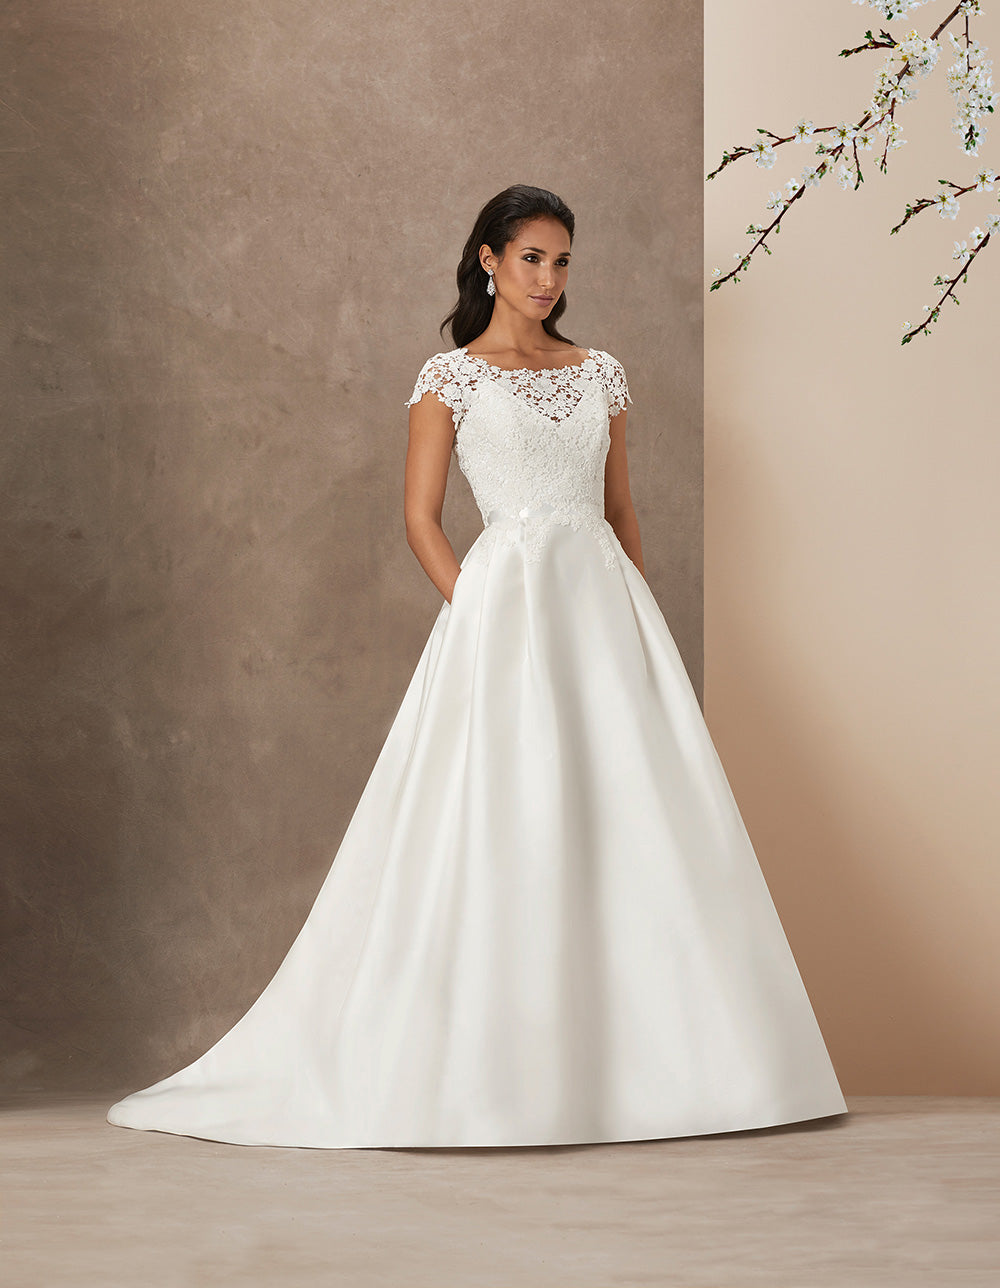 To bra or not to bra? - Caroline Arthur Bespoke Wedding Dress Designer